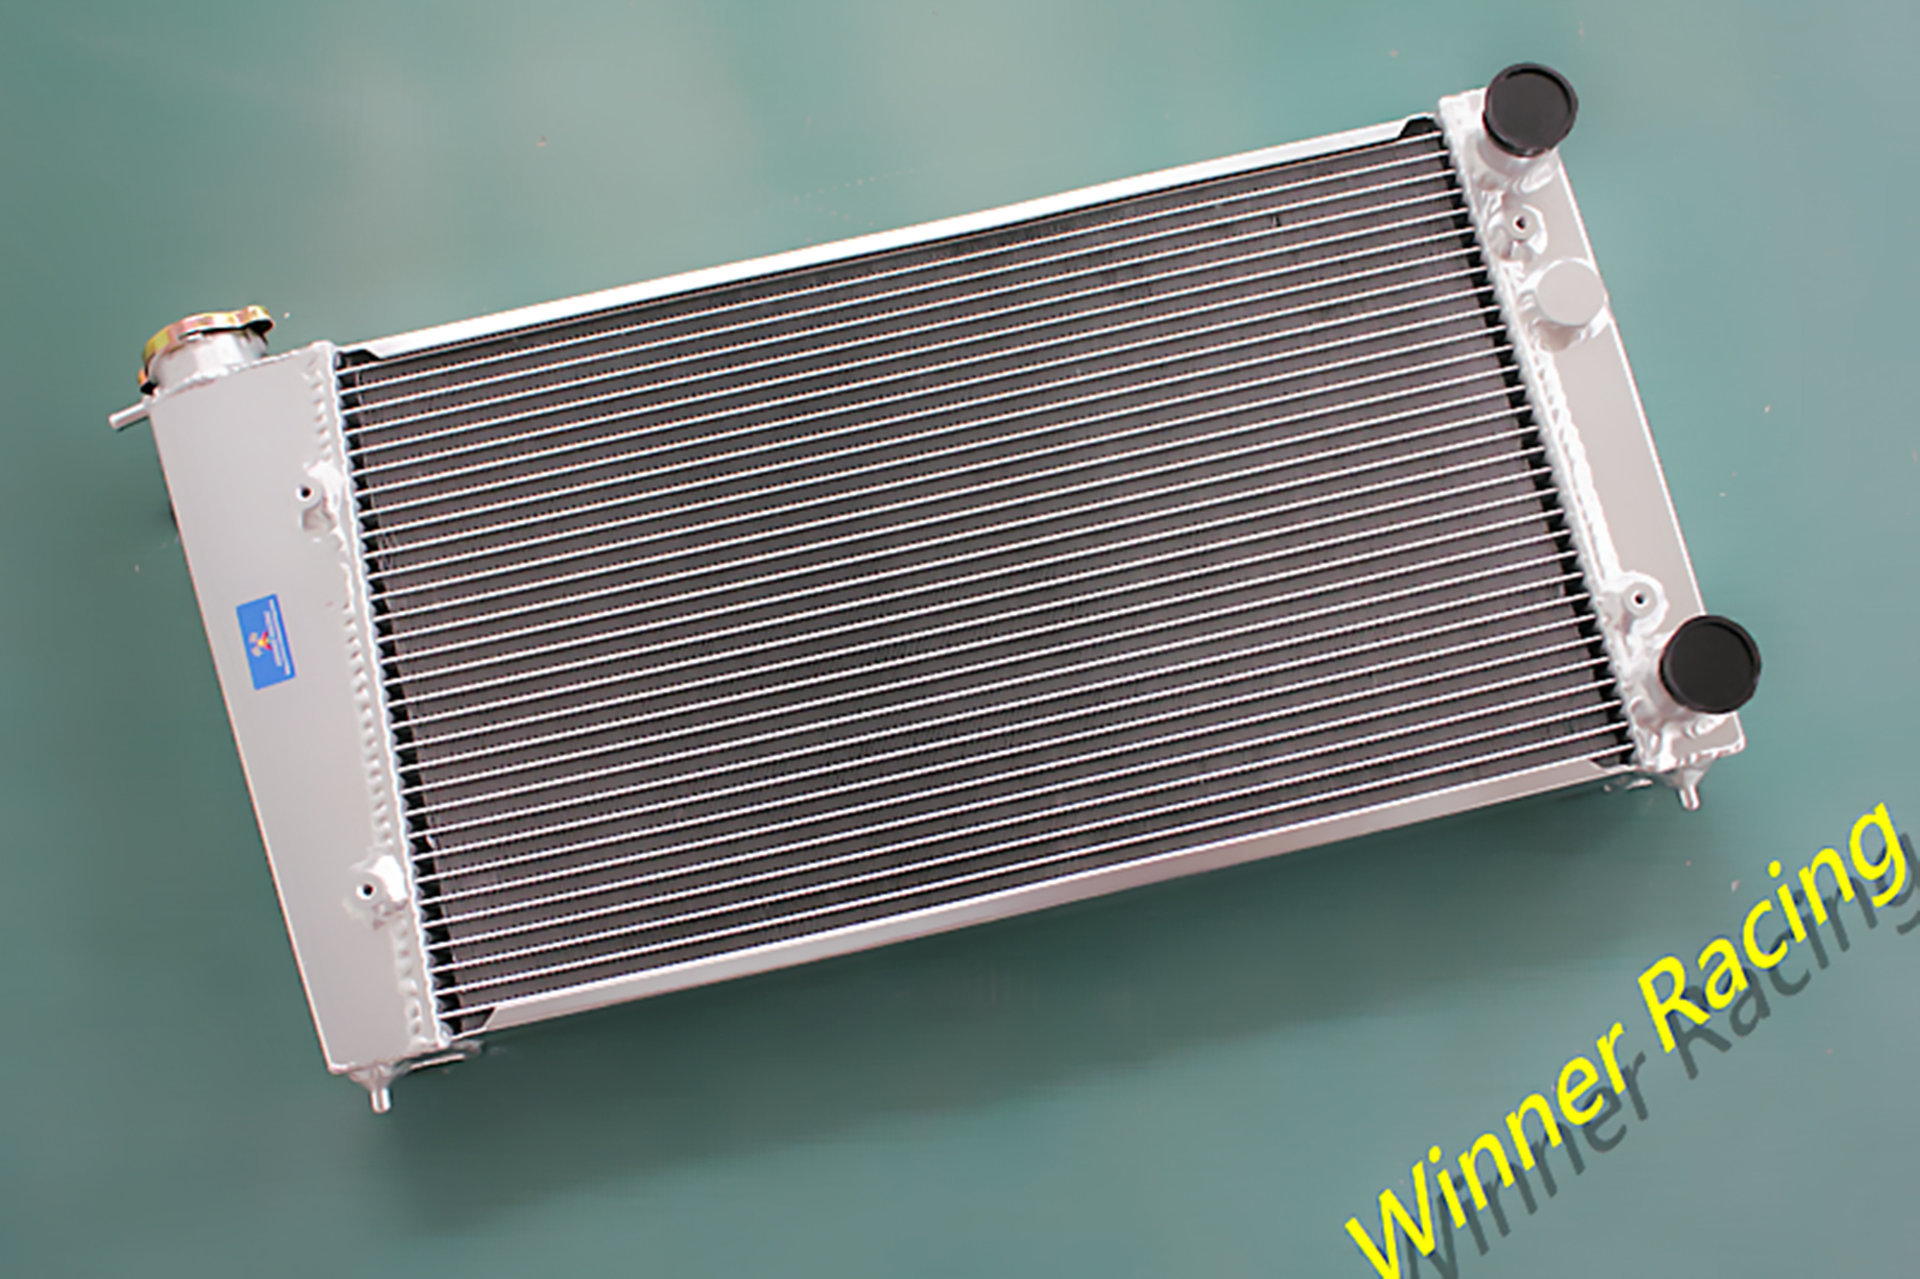  50mm custom  Aluminum radiator For VW GOLF MK1/CADDY/ SCIROCCO GTI SPEC 1.6 1.8 